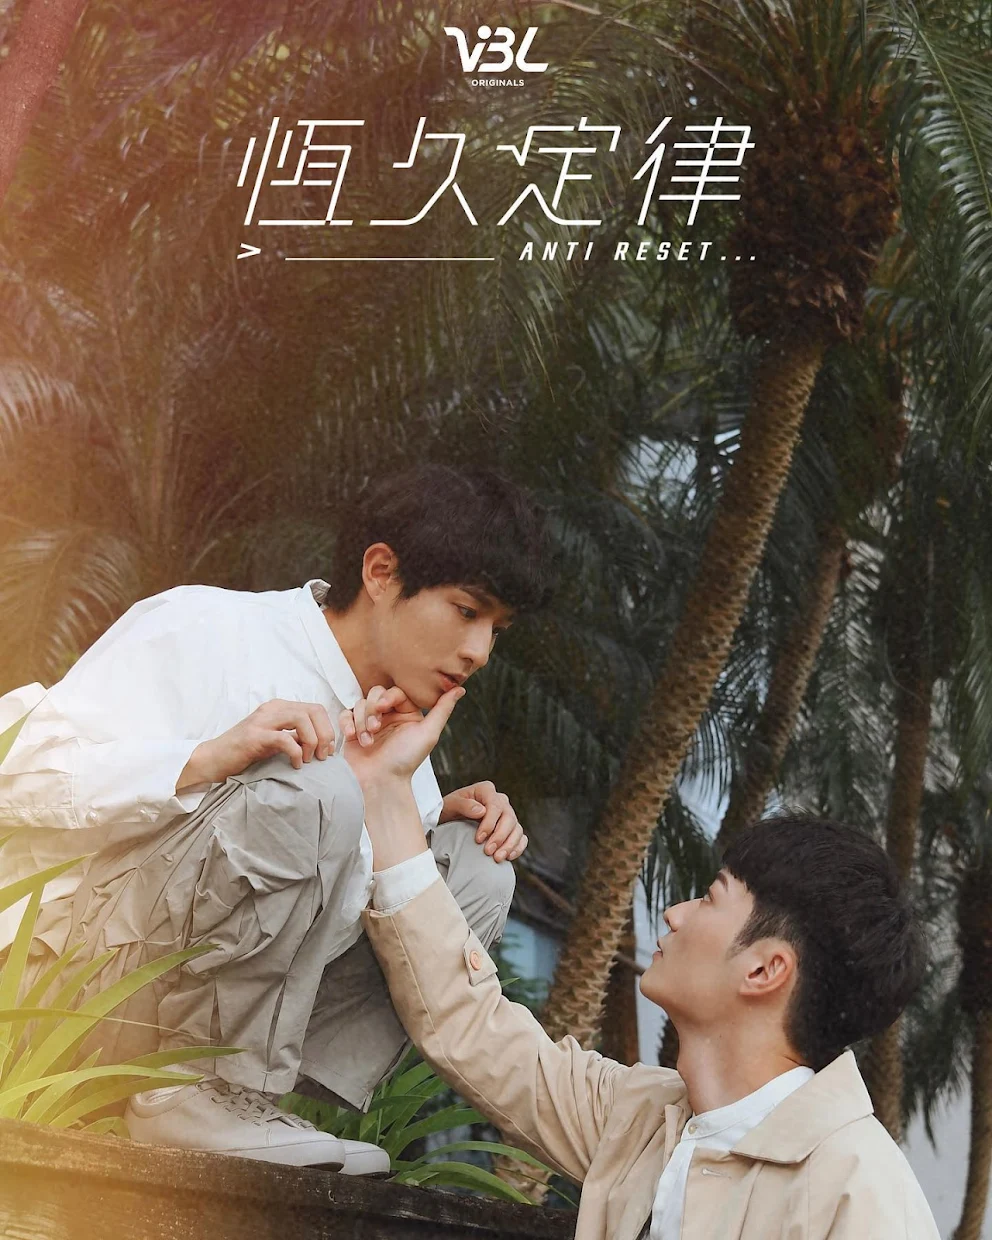 Poster Pertama Drama BL Taiwan “Anti Reset” Telah Dirilis, Ceritakan Tentang Hubungan Antara Robot dan Manusia